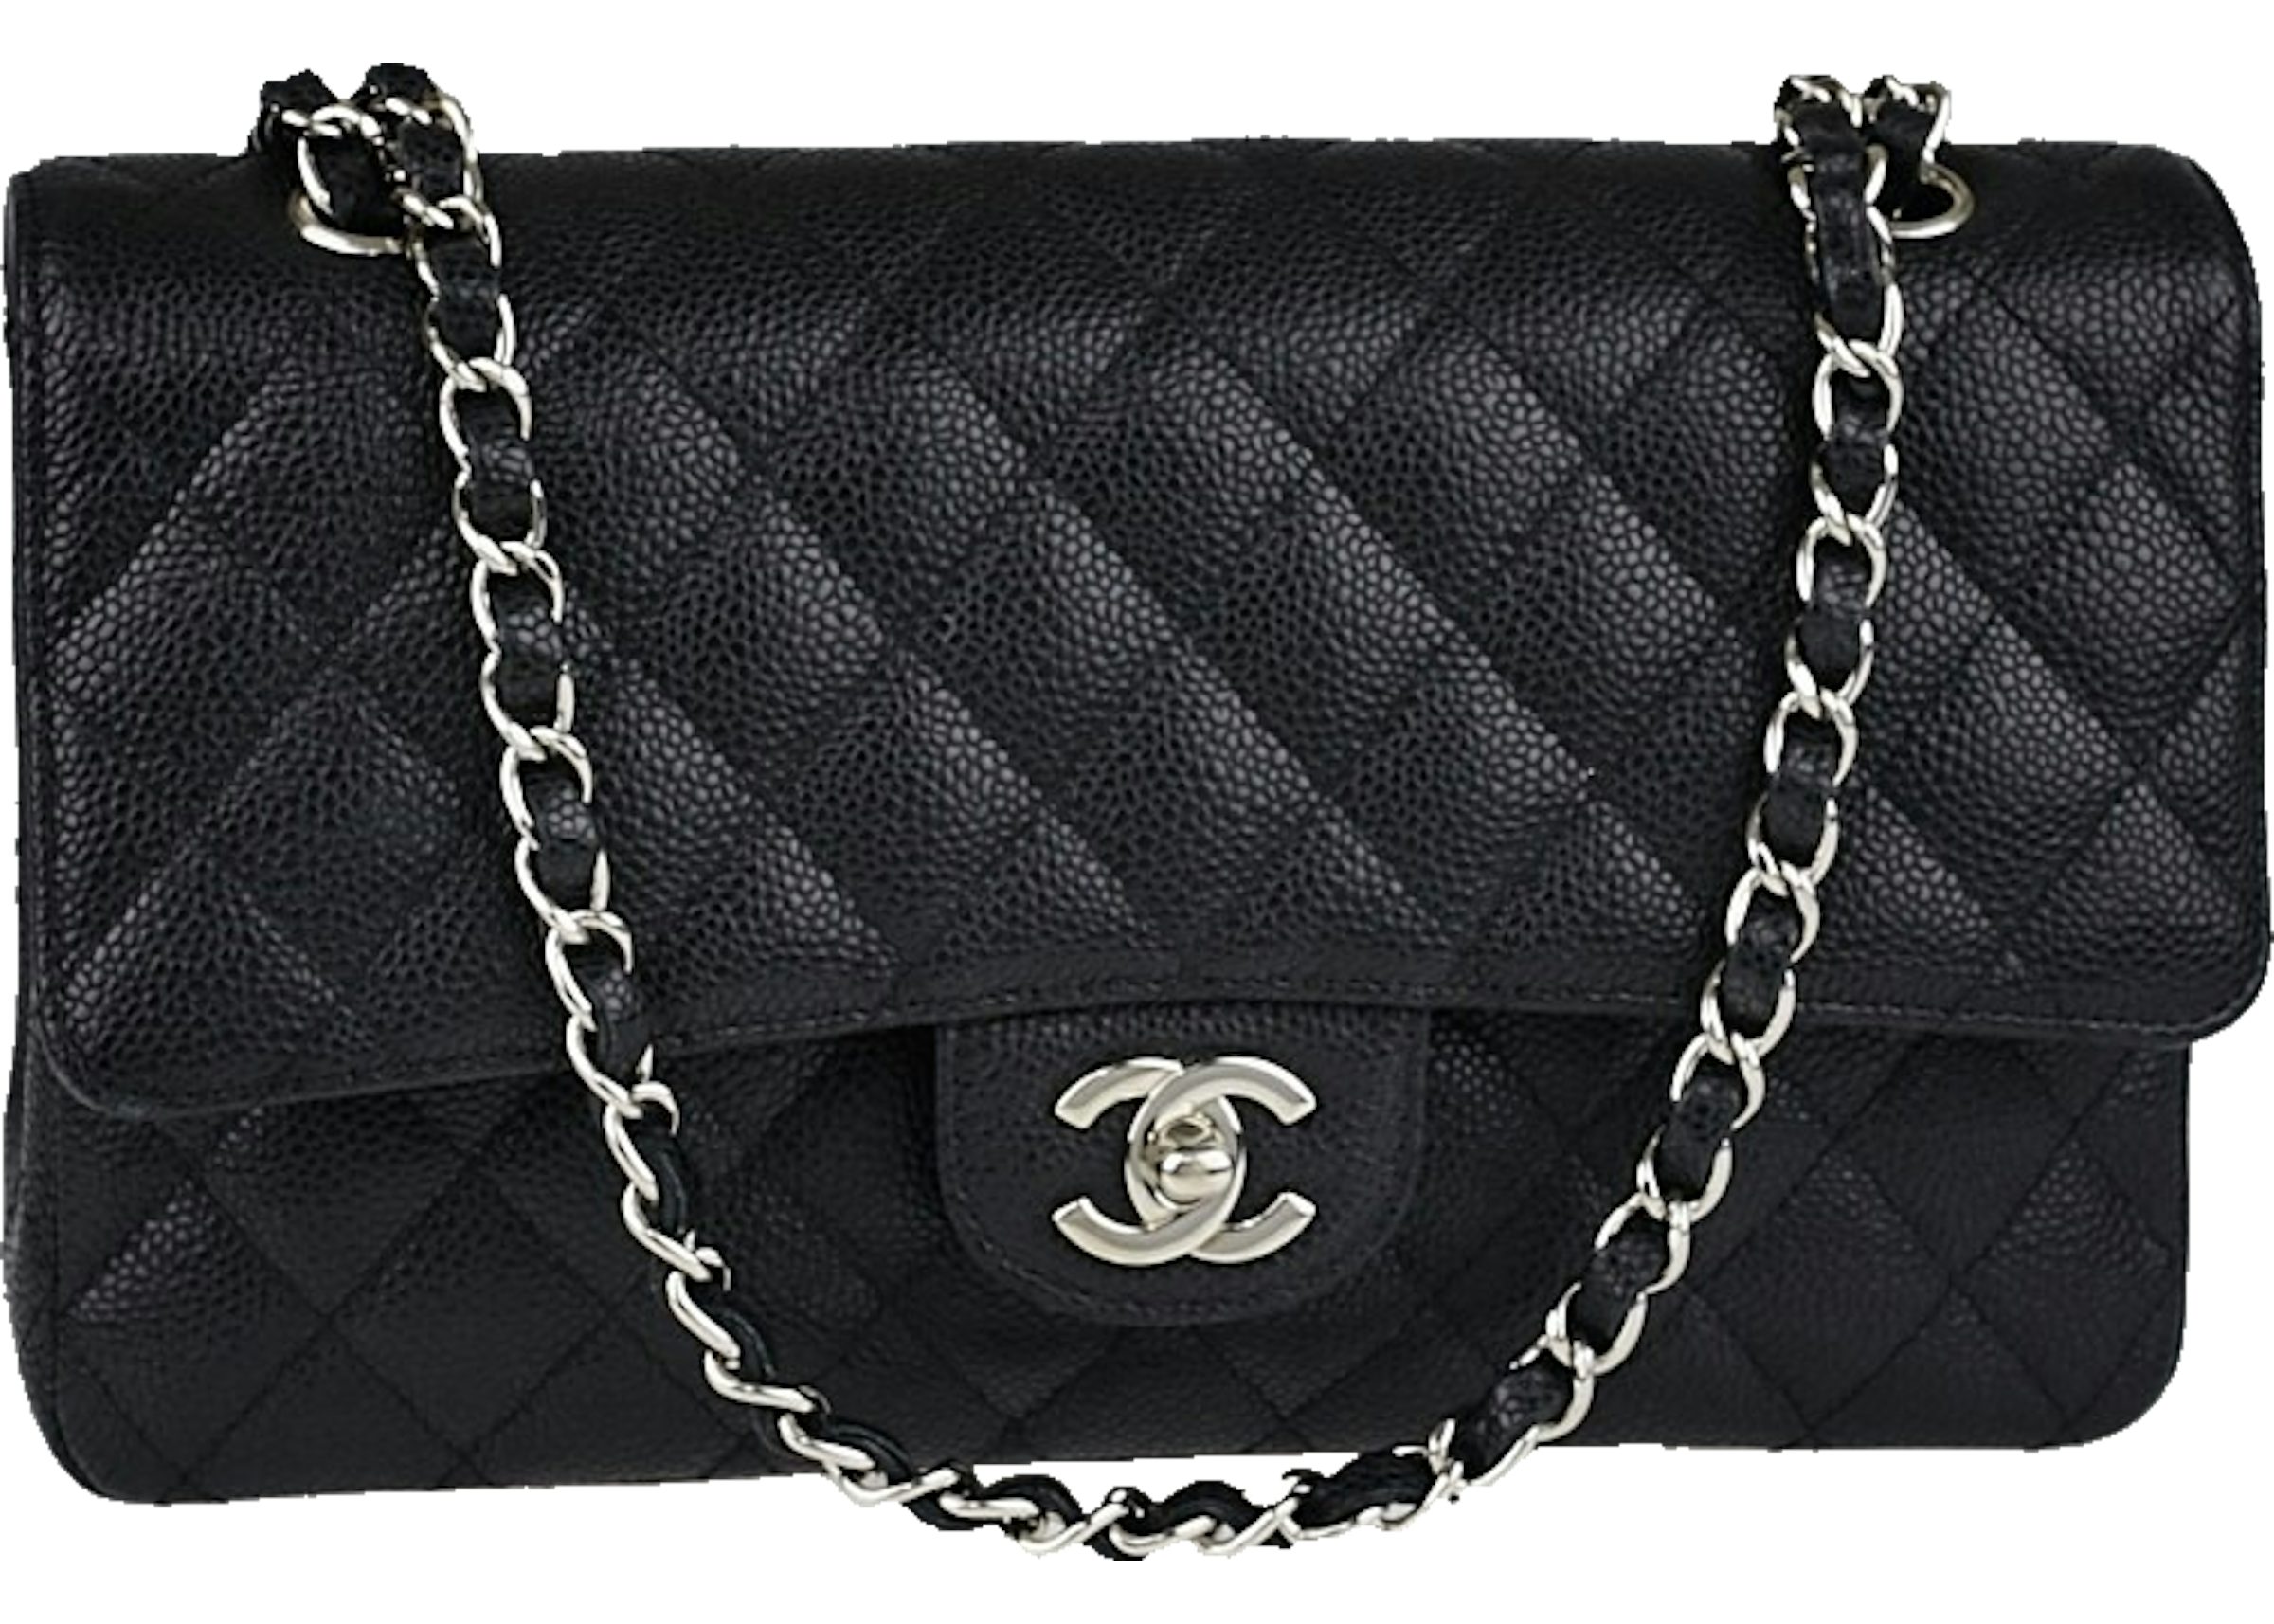 Chanel Classic Flap, Small or Medium?